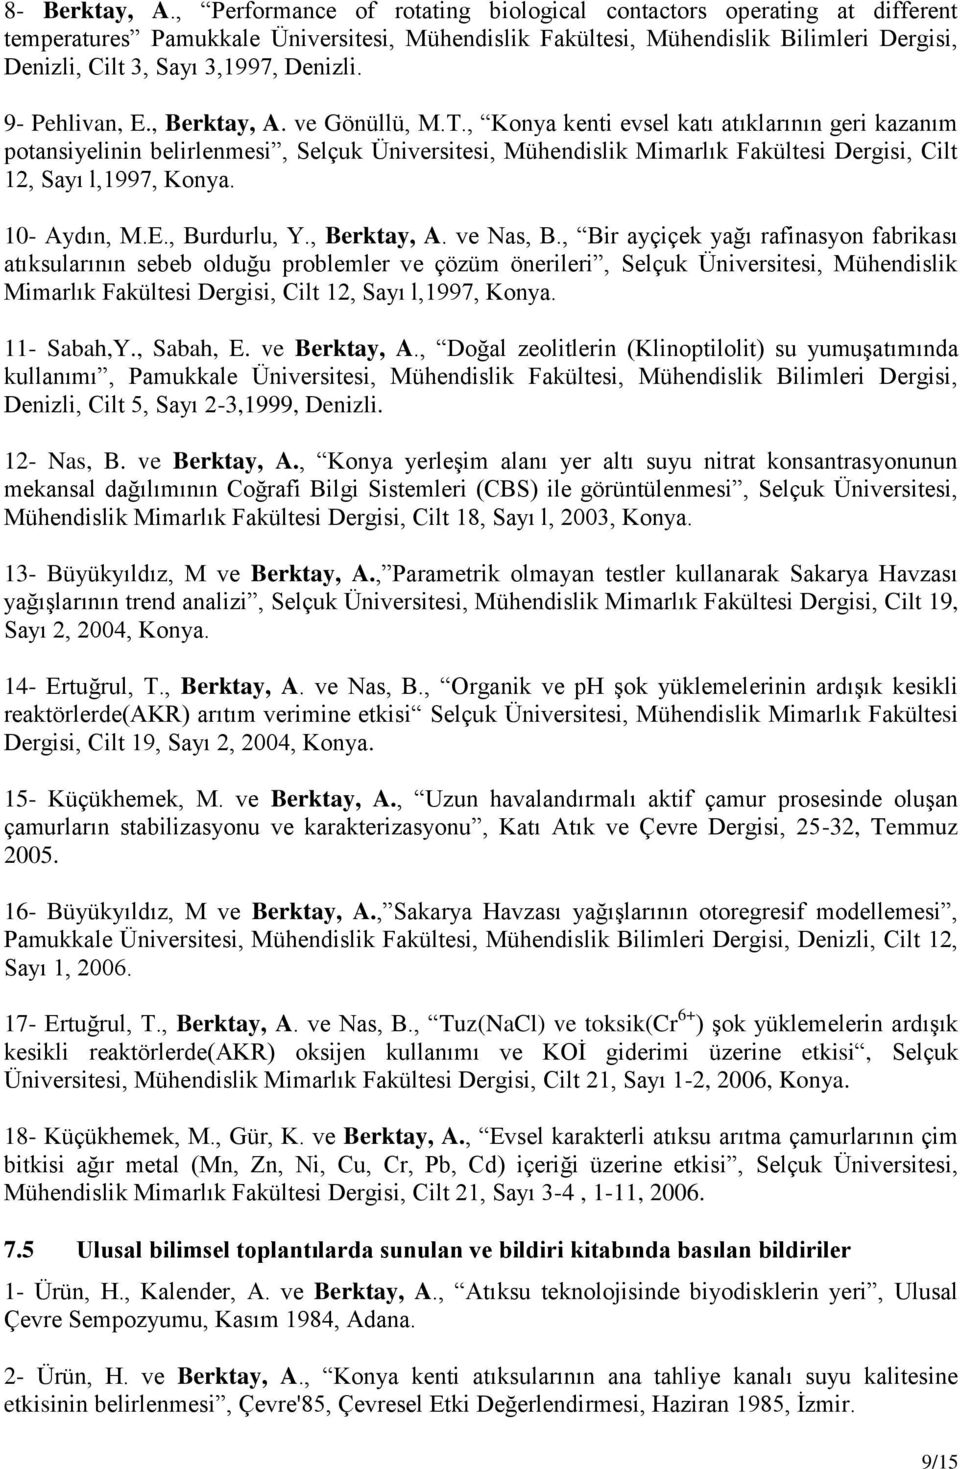 9- Pehlivan, E., Berktay, A. ve Gönüllü, M.T.